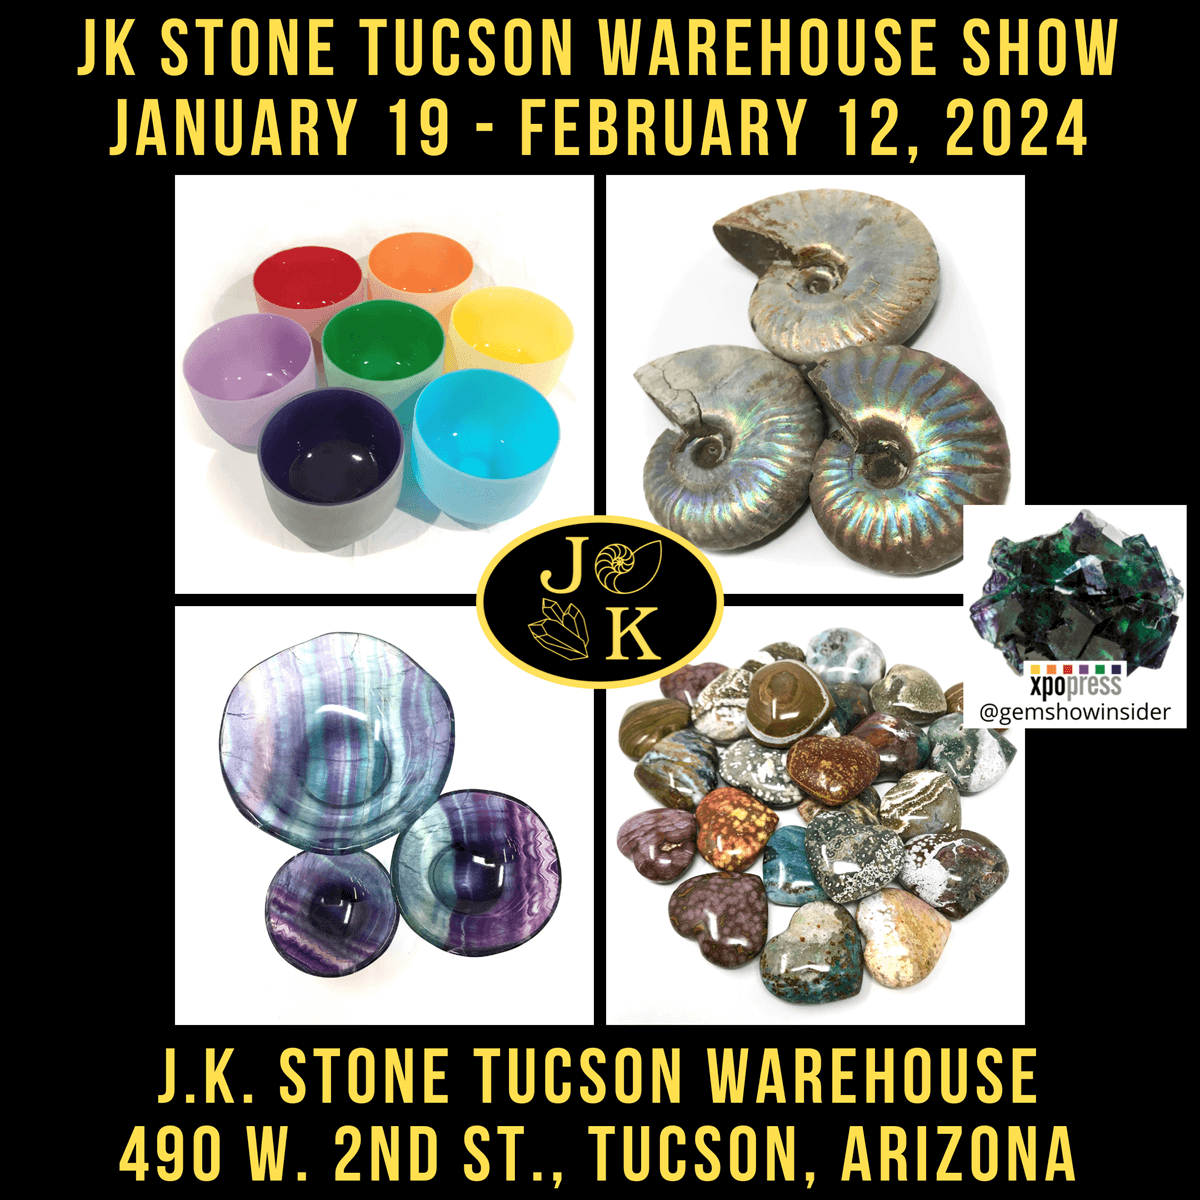 JK Stone Tucson Warehouse Show 2024 - Tucson 2024